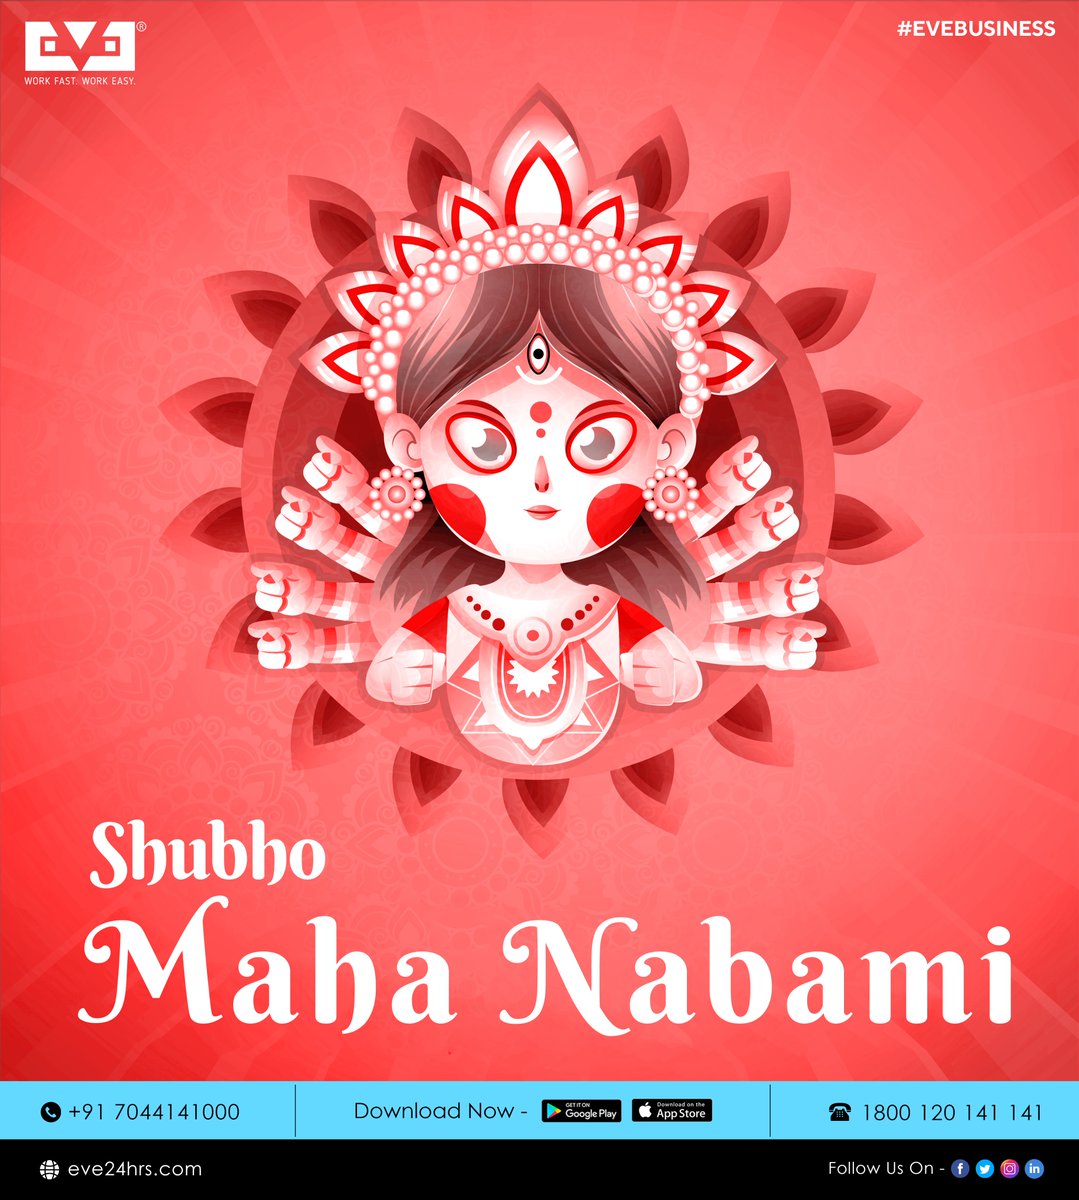 Shubho Nabami from all of us at EVE !

#DurgaPuja #DurgaPuja2020 #DurgaPujo #ShubhoSharodiya #MahaNabami #Nabami #Navaratri #navaratri2020 #durgapujaspecial #durgamaa #festival #festiveseason #festivevibes #biggestfestival